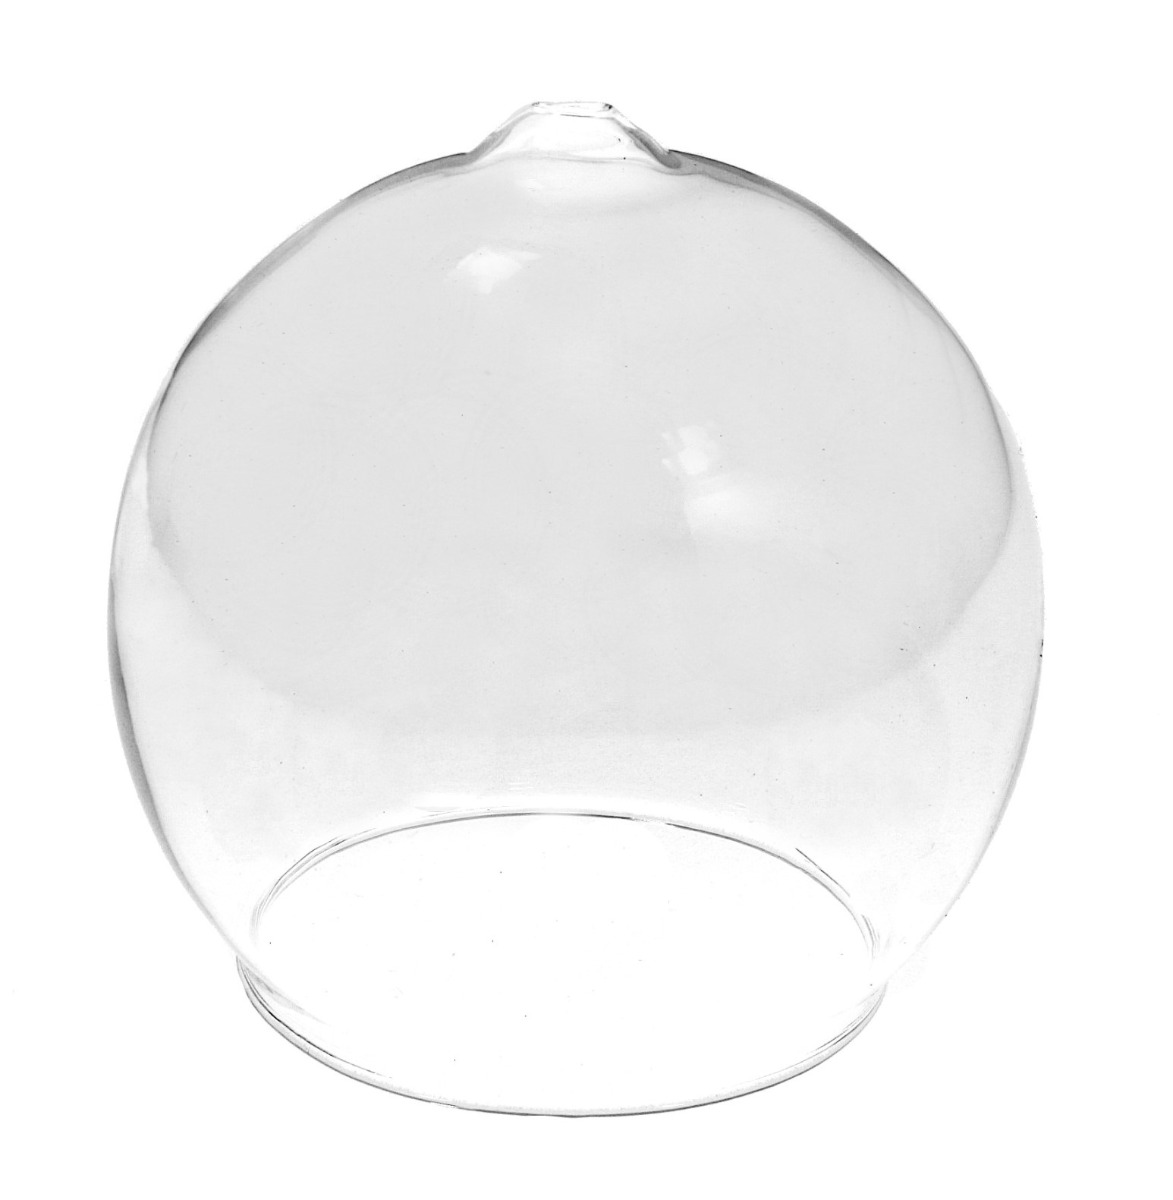 Glob sticla transparent forma cupola rotunda 8cm in cutie carton 357009